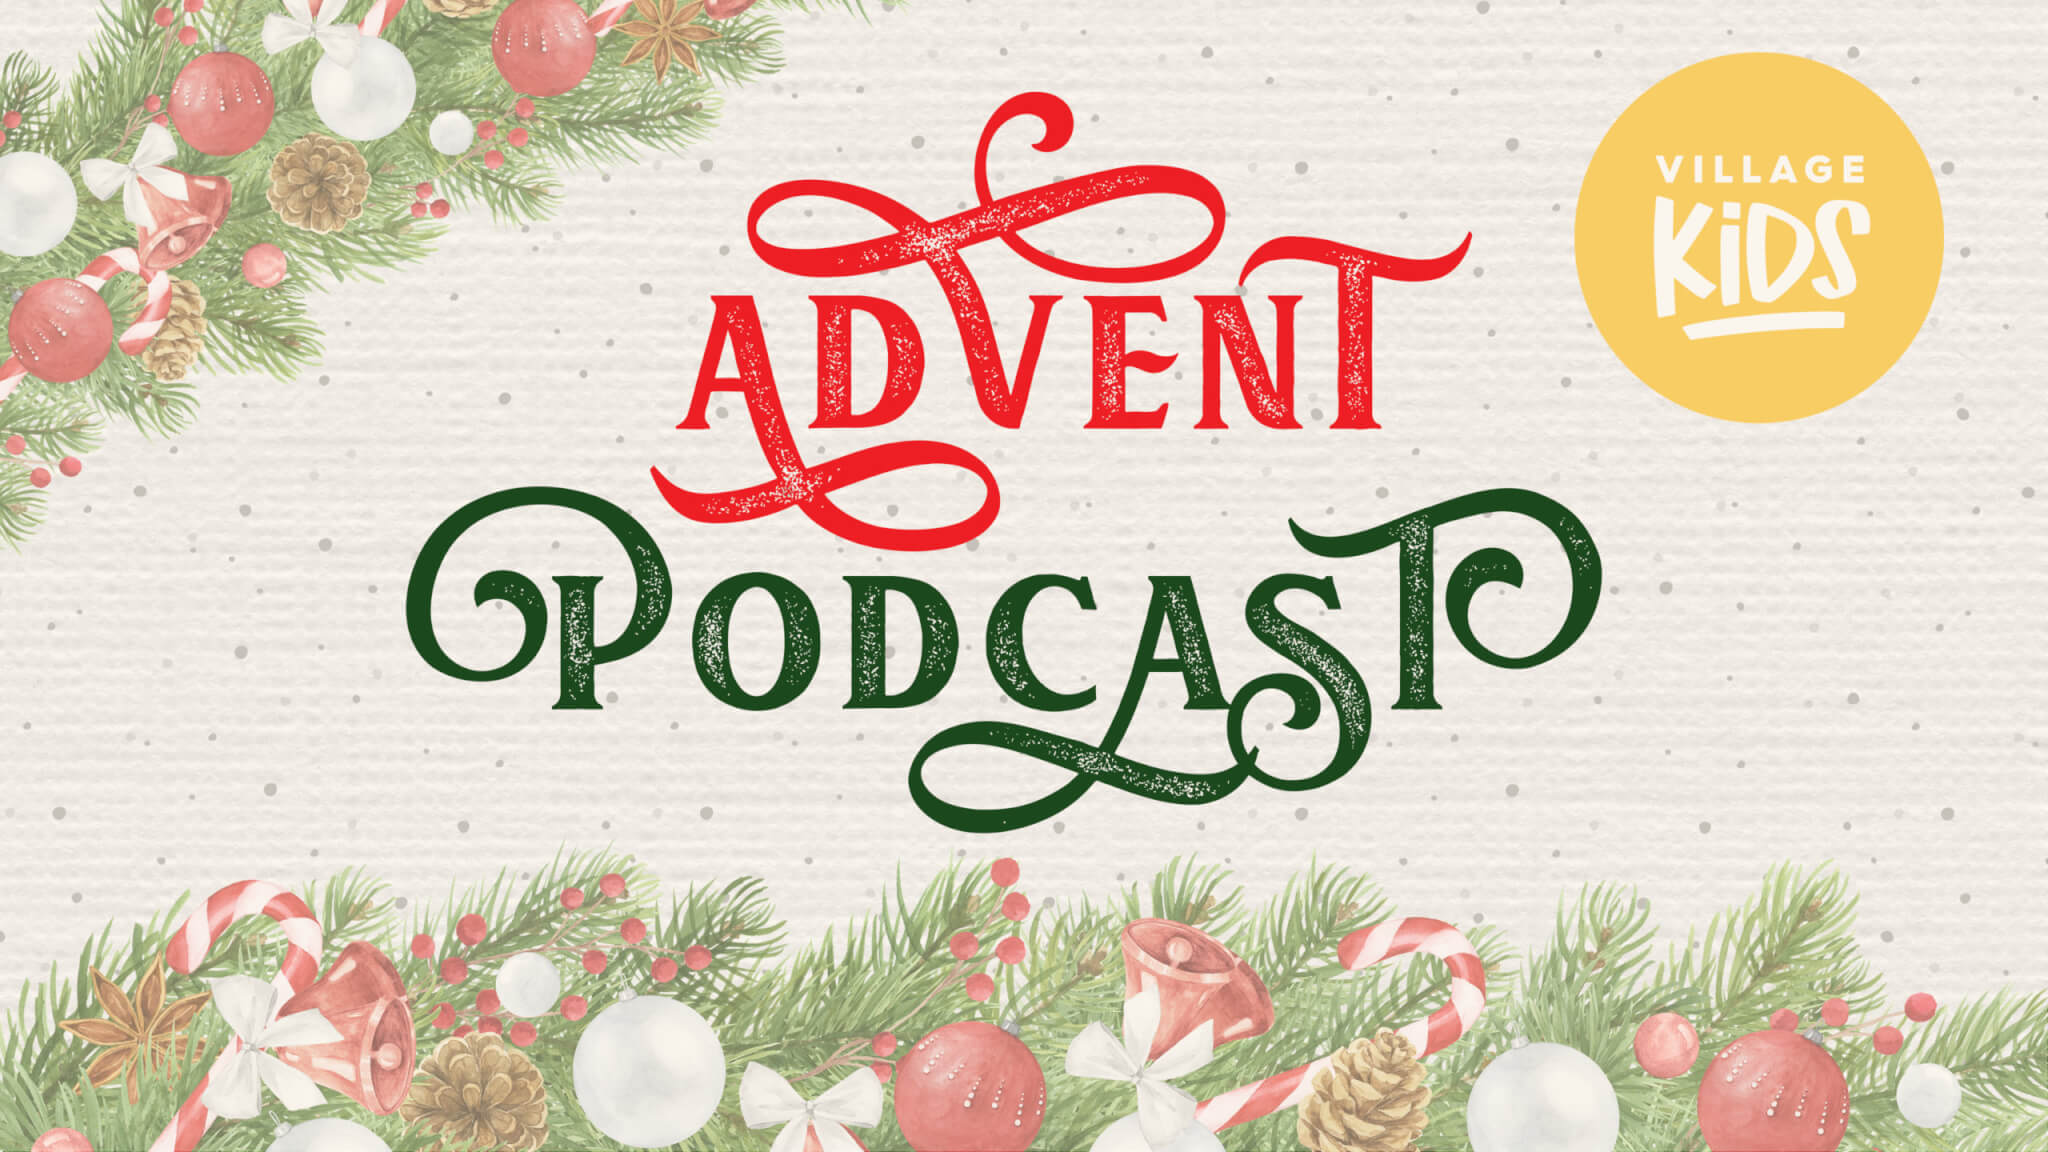 Advent 2020 Podcast: Teaser